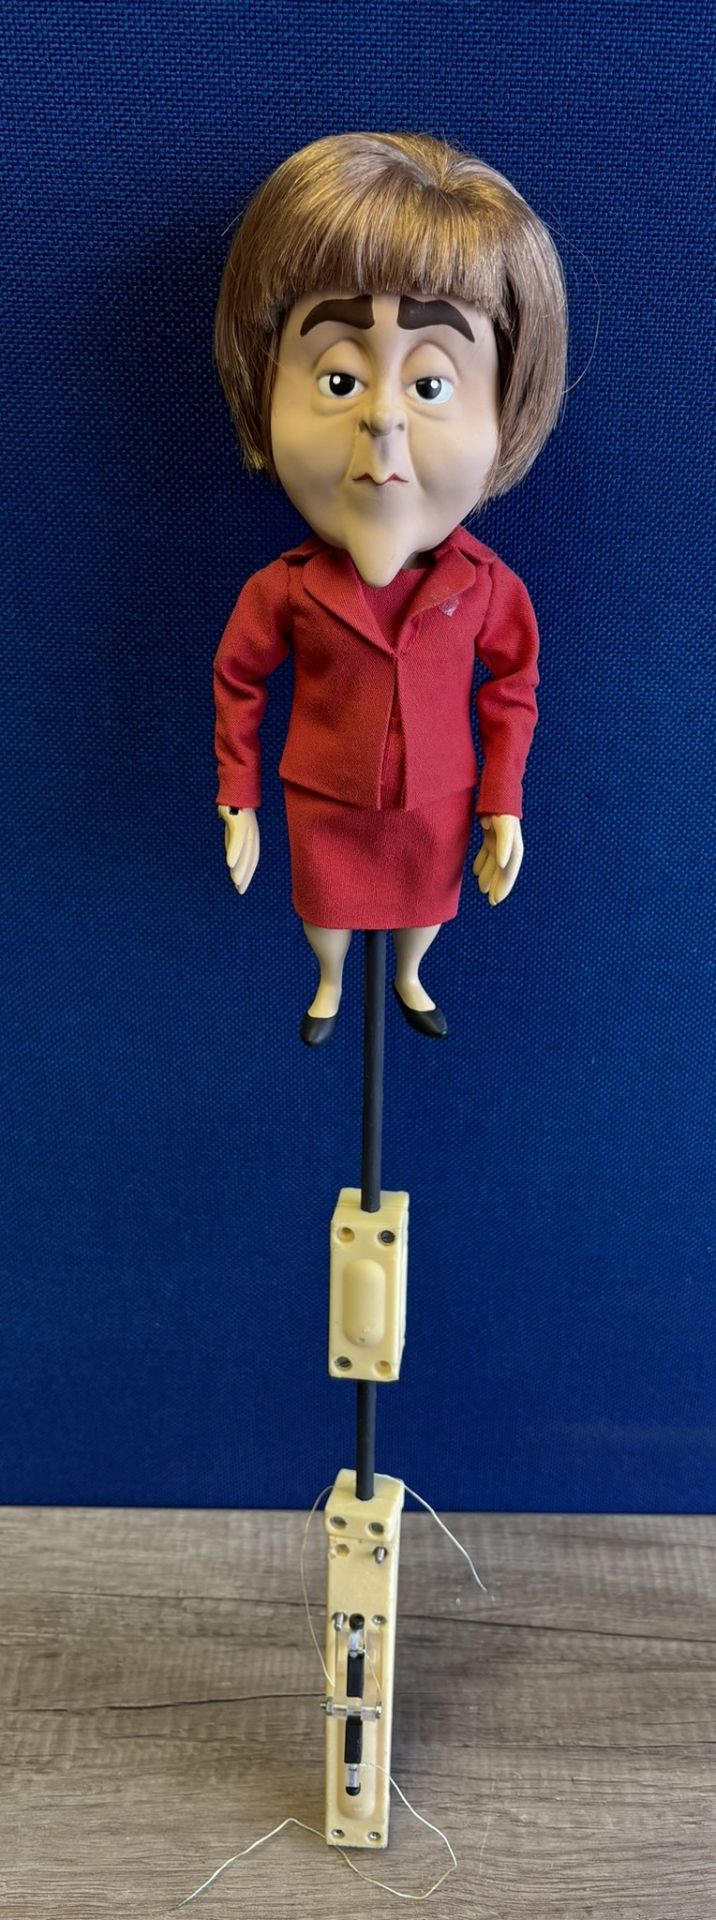 Newzoid puppet - Nicola Sturgeon - Image 3 of 3